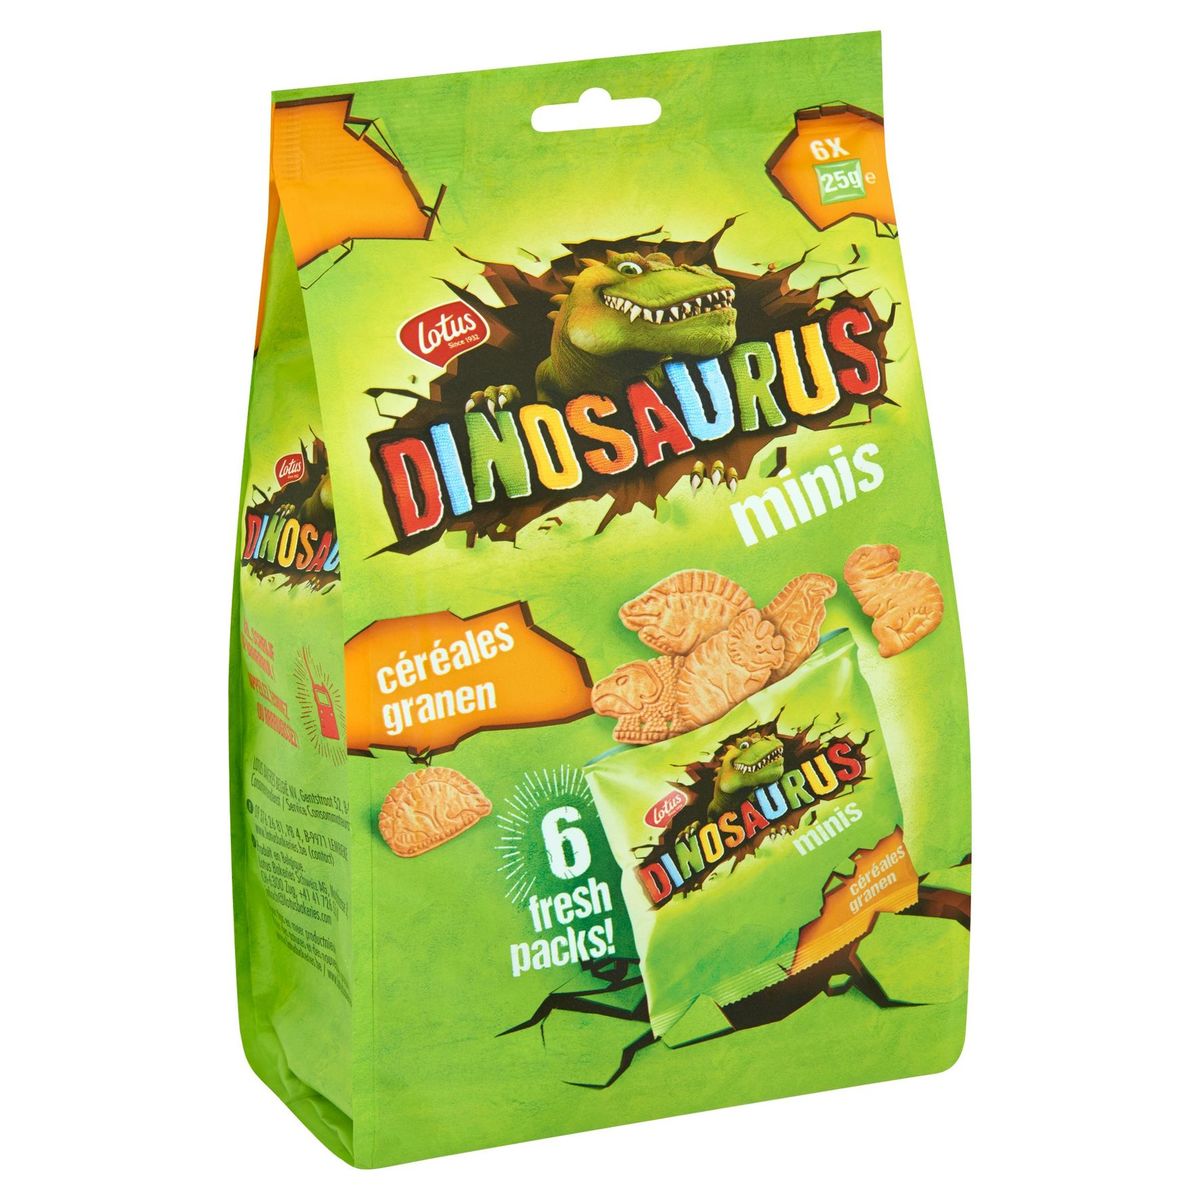 Lotus Dinosaurus Minis Cereales 6 X 25 G Carrefour Site